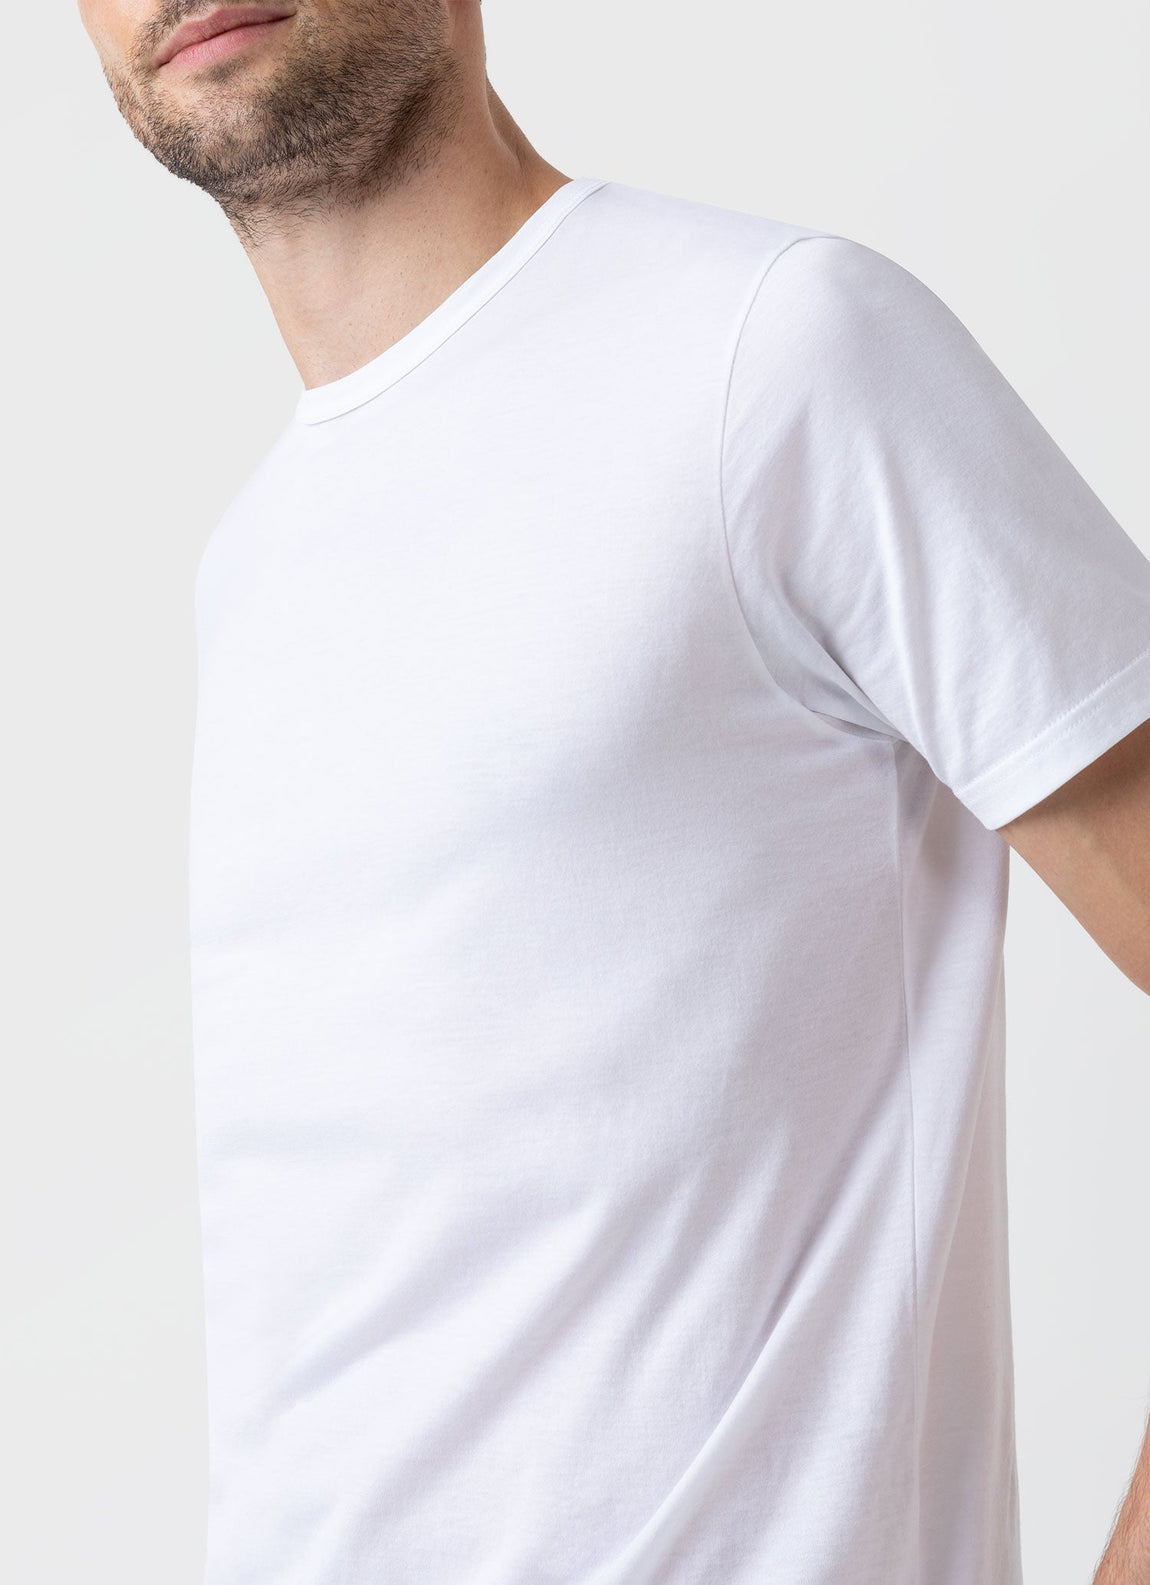 puberteit Medewerker hospita Men's Classic Cotton T-shirt in White | Sunspel